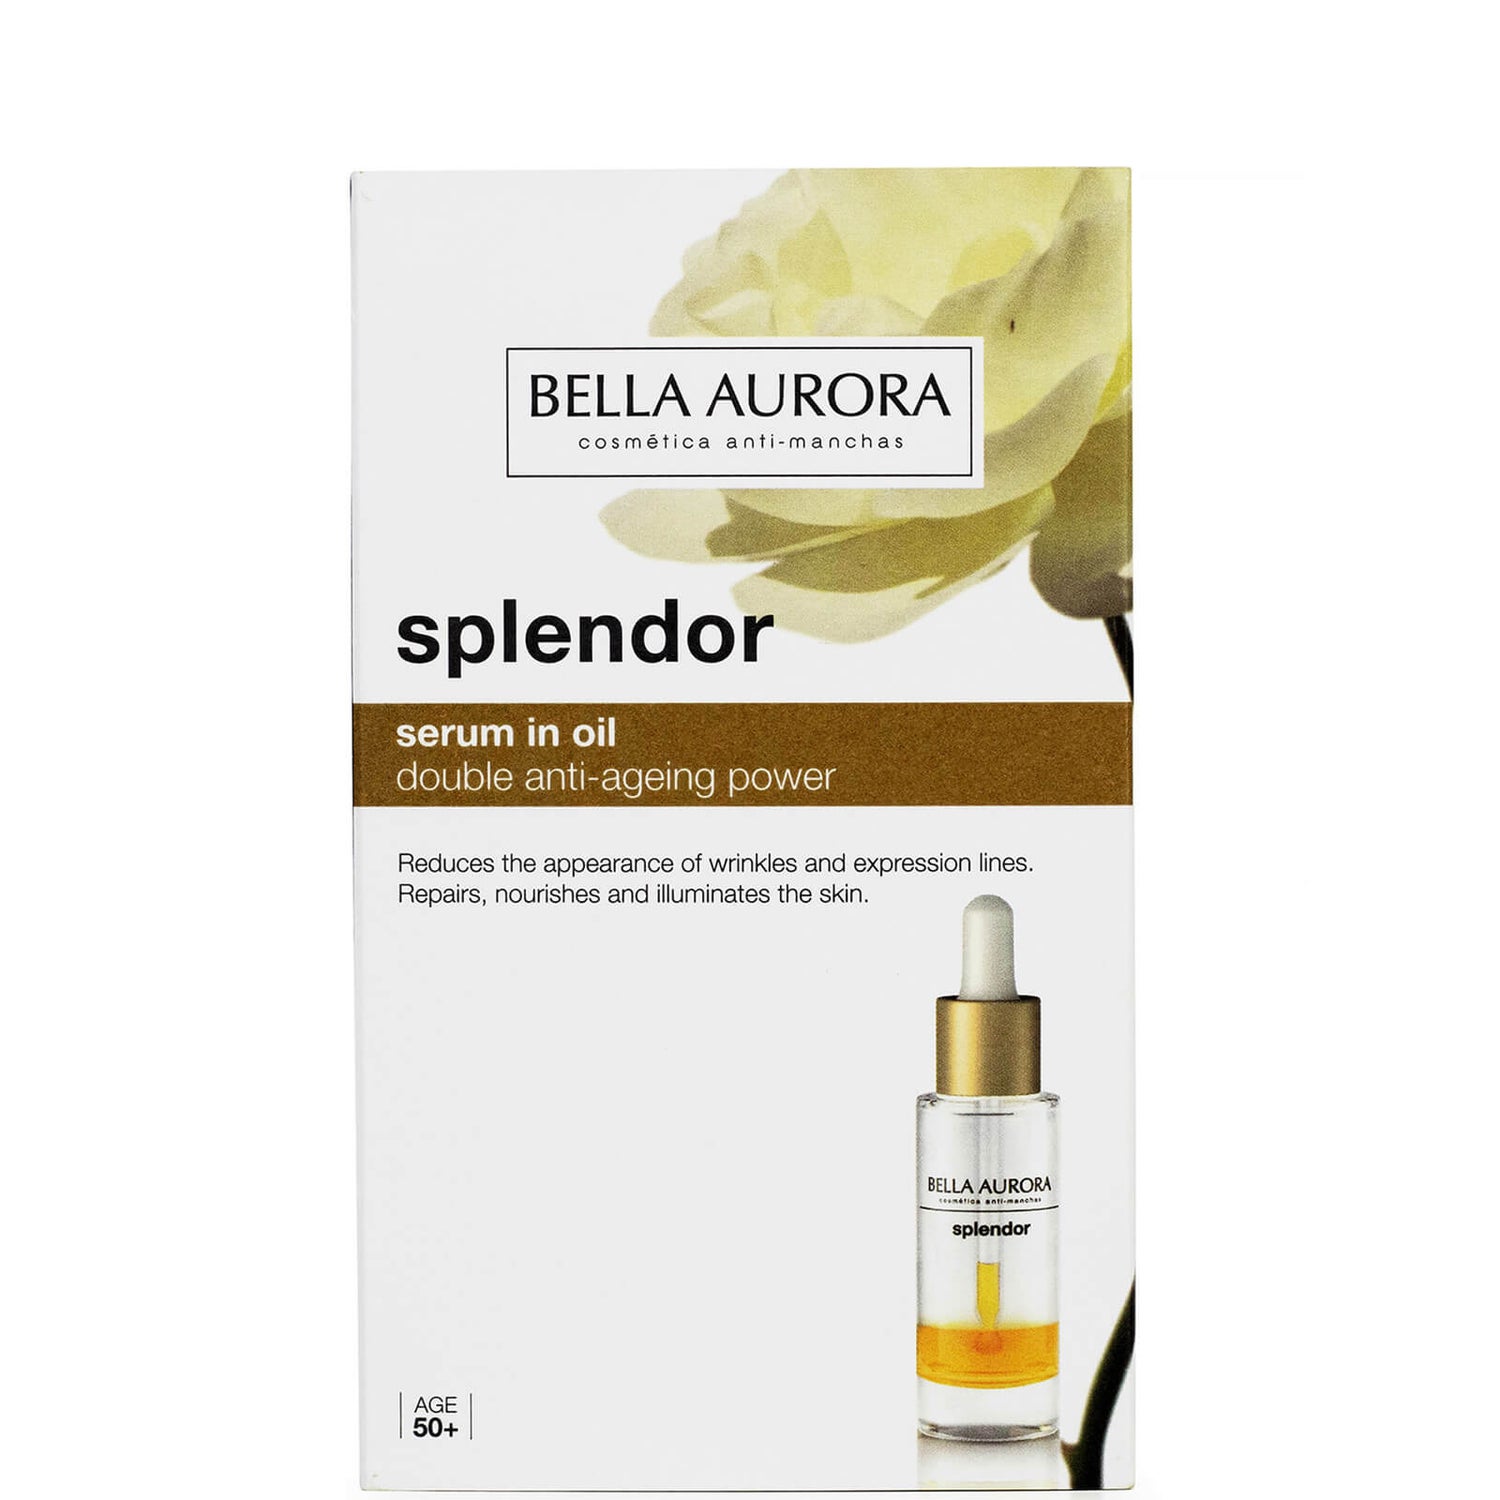 Bella Aurora Splendor Serum In Oil 50+ 20ml